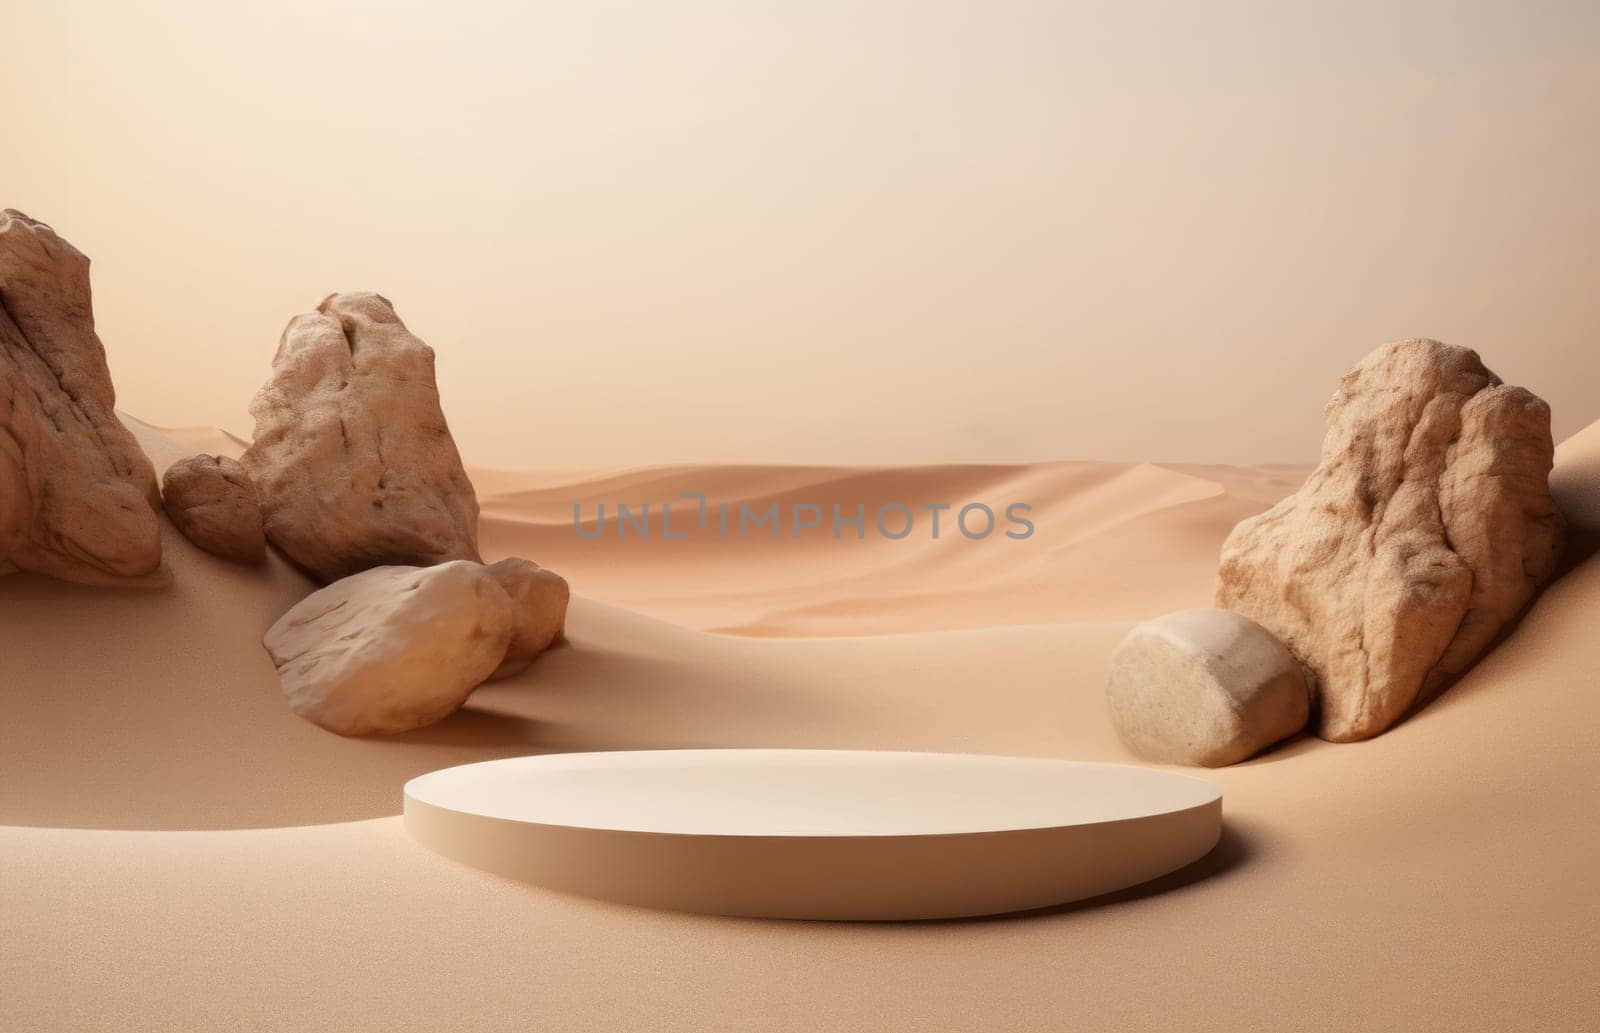 3d of desert with rocks and white board on sand by studiodav